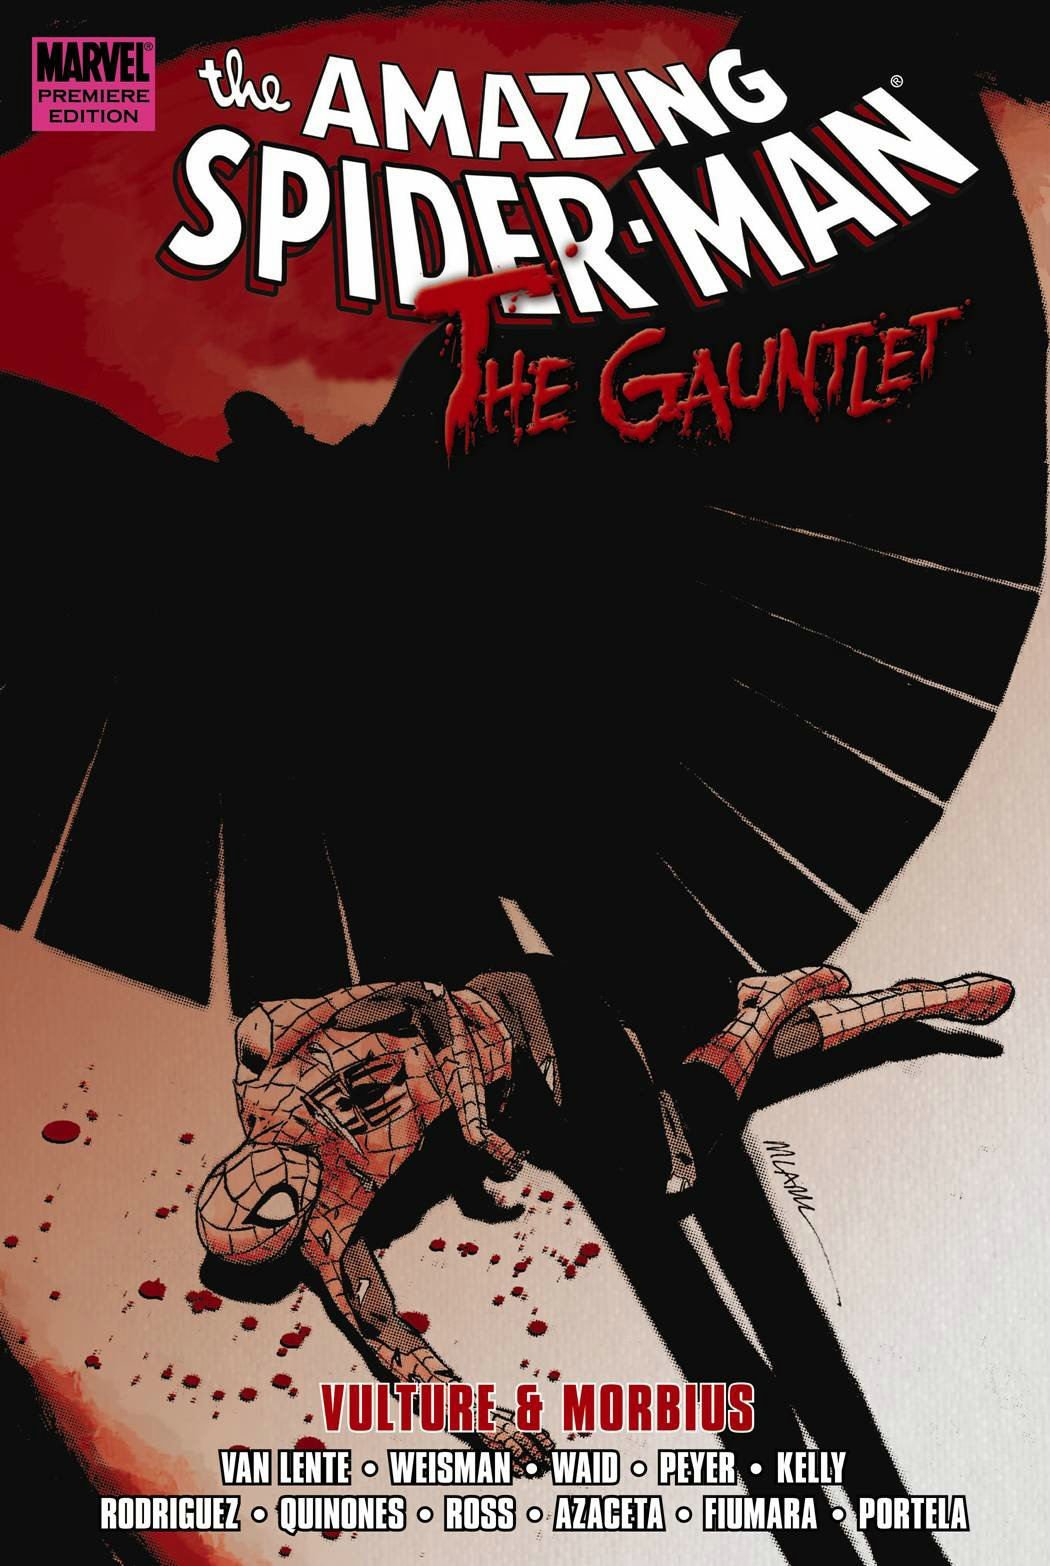 Spider-Man: The Gauntlet, Vol. 3 - Vulture & Morbius PAPERBACK